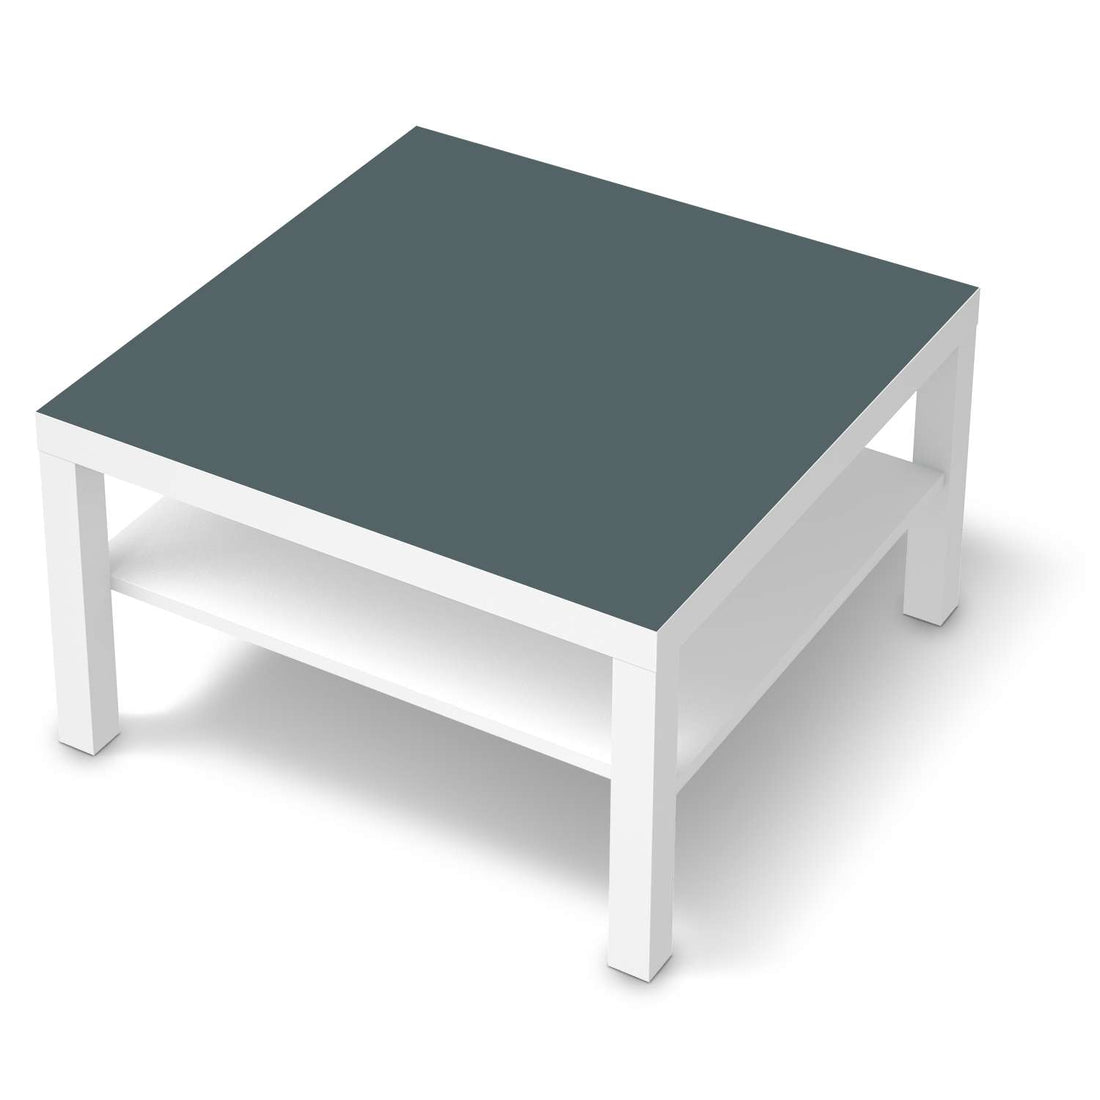 Selbstklebende Folie Blaugrau Light - IKEA Lack Tisch 78x78 cm - weiss